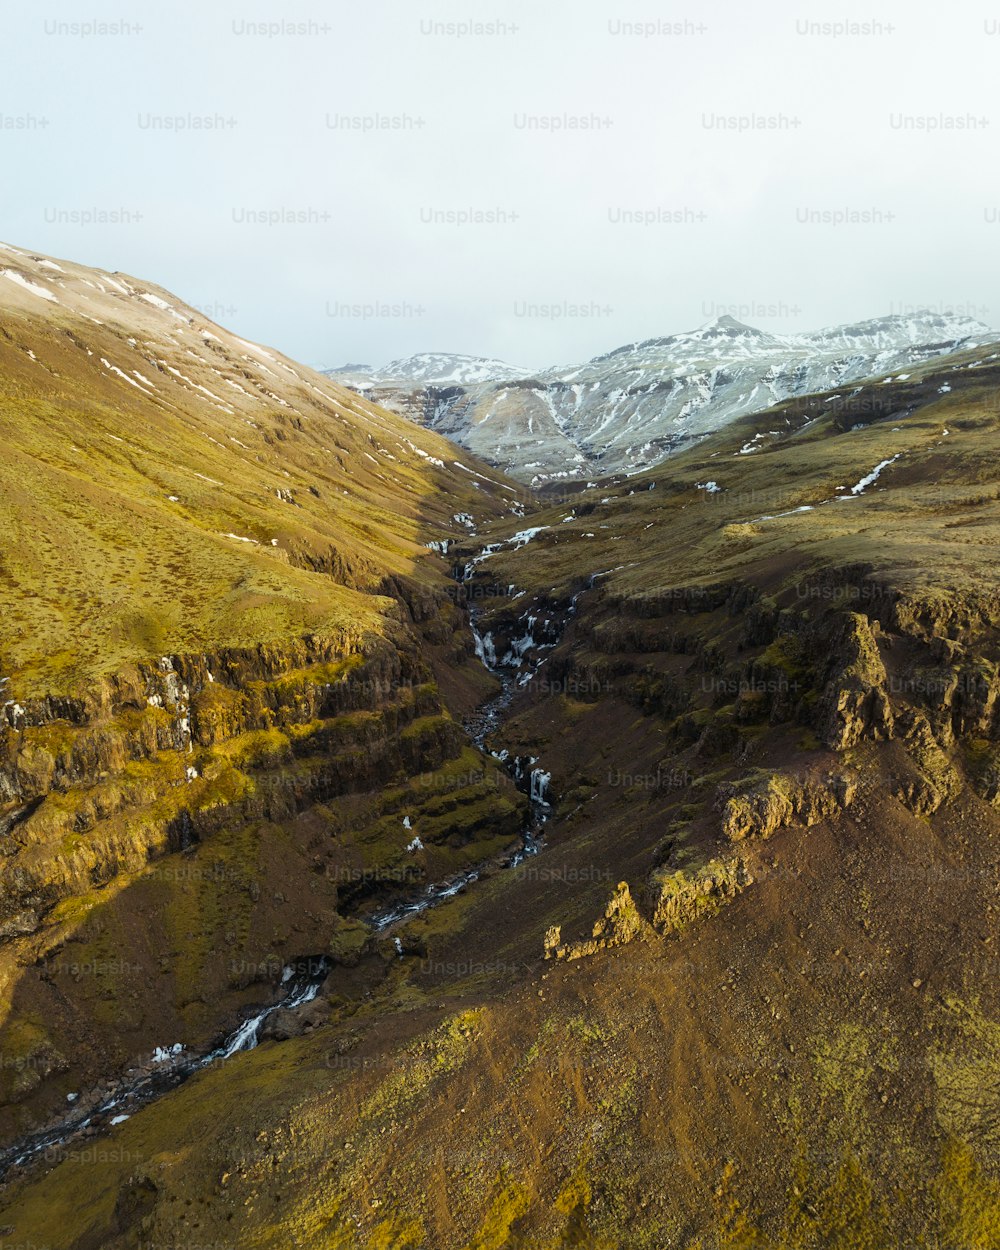 Una veduta aerea di una valle in montagna